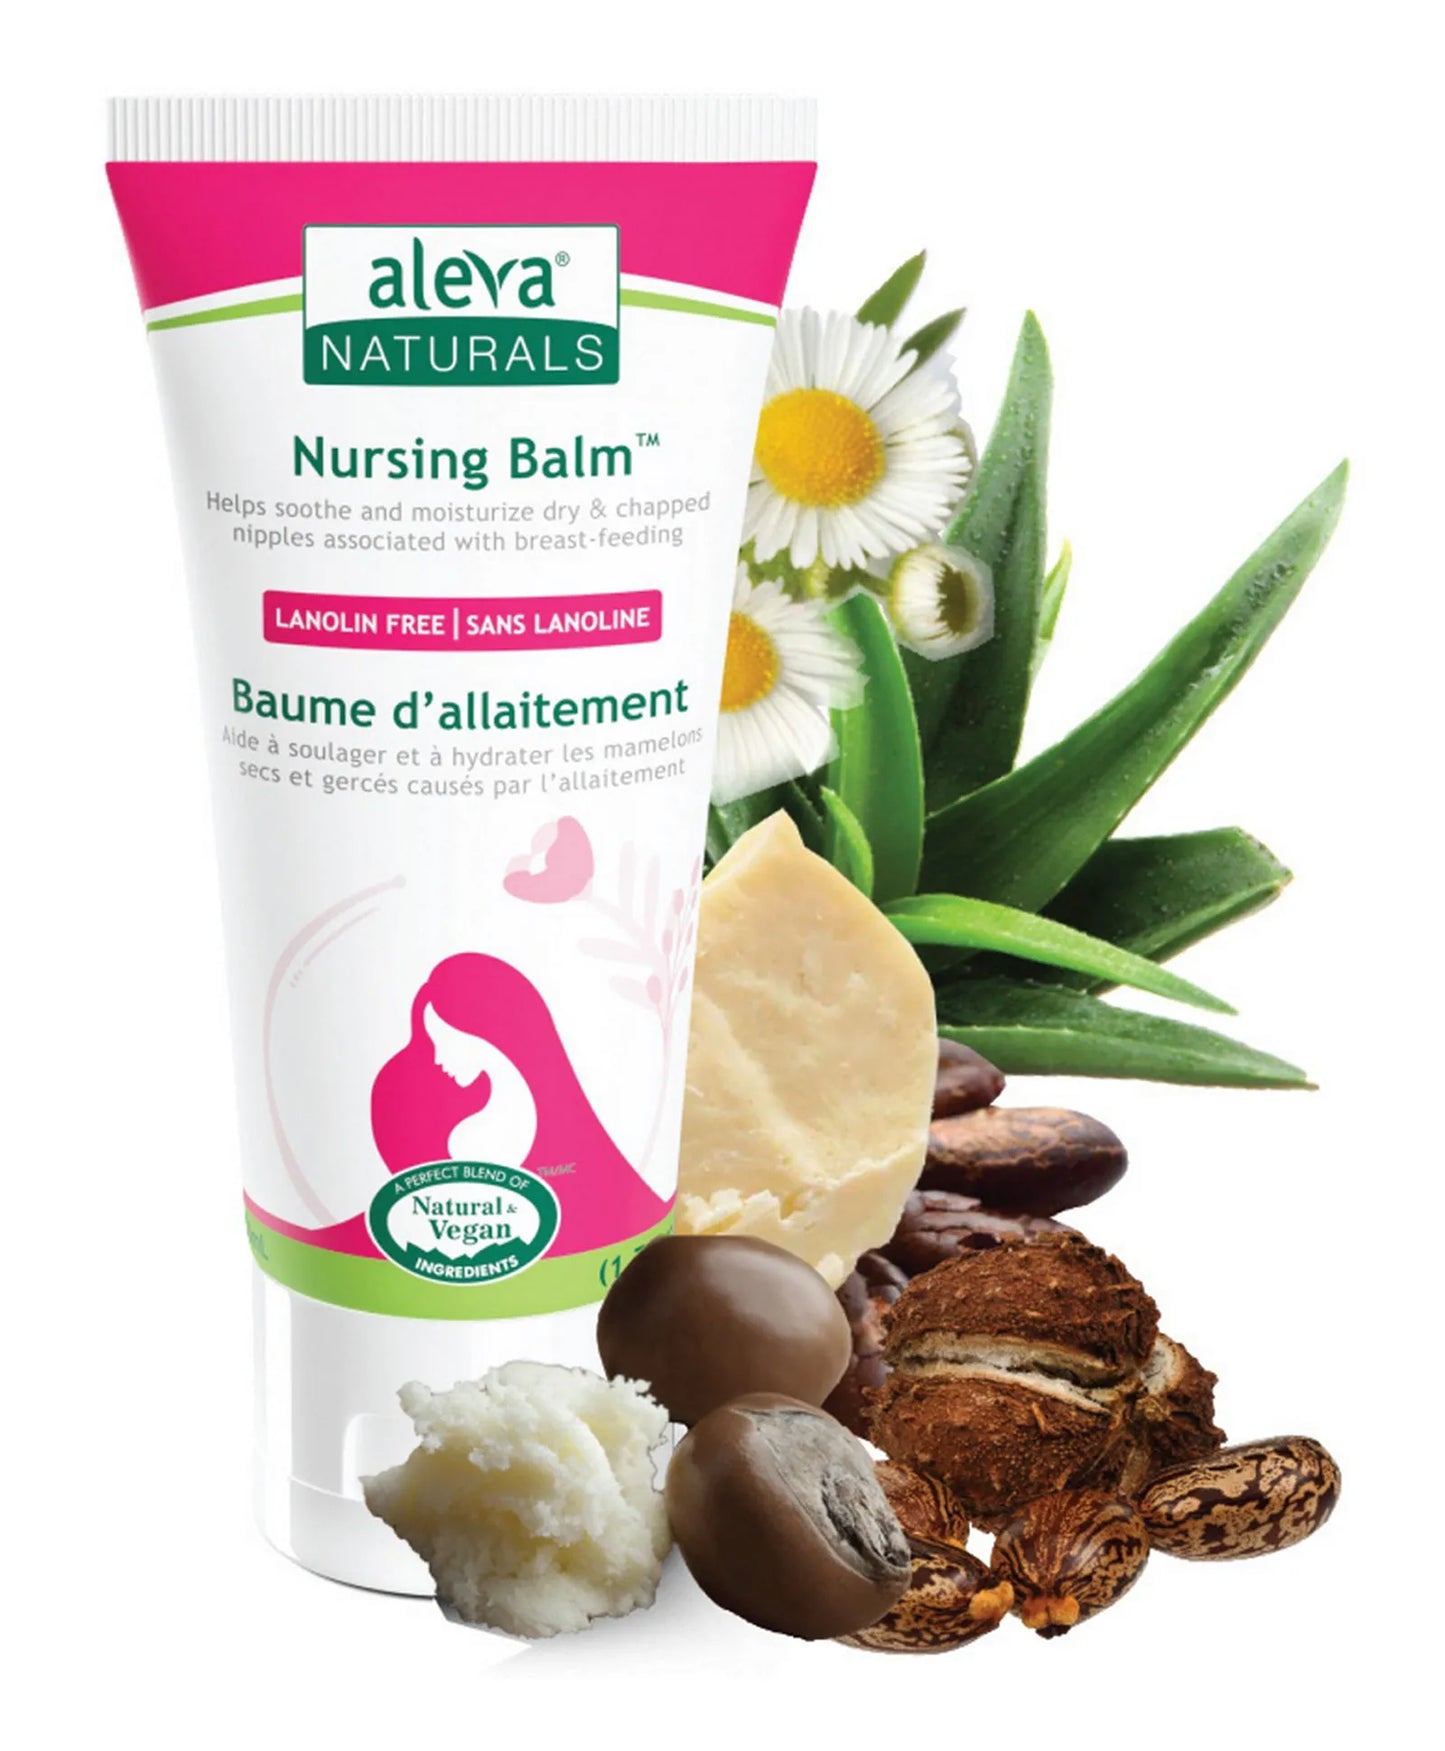 Aleva Naturals Maternal Care Nursing Balm - 50ml